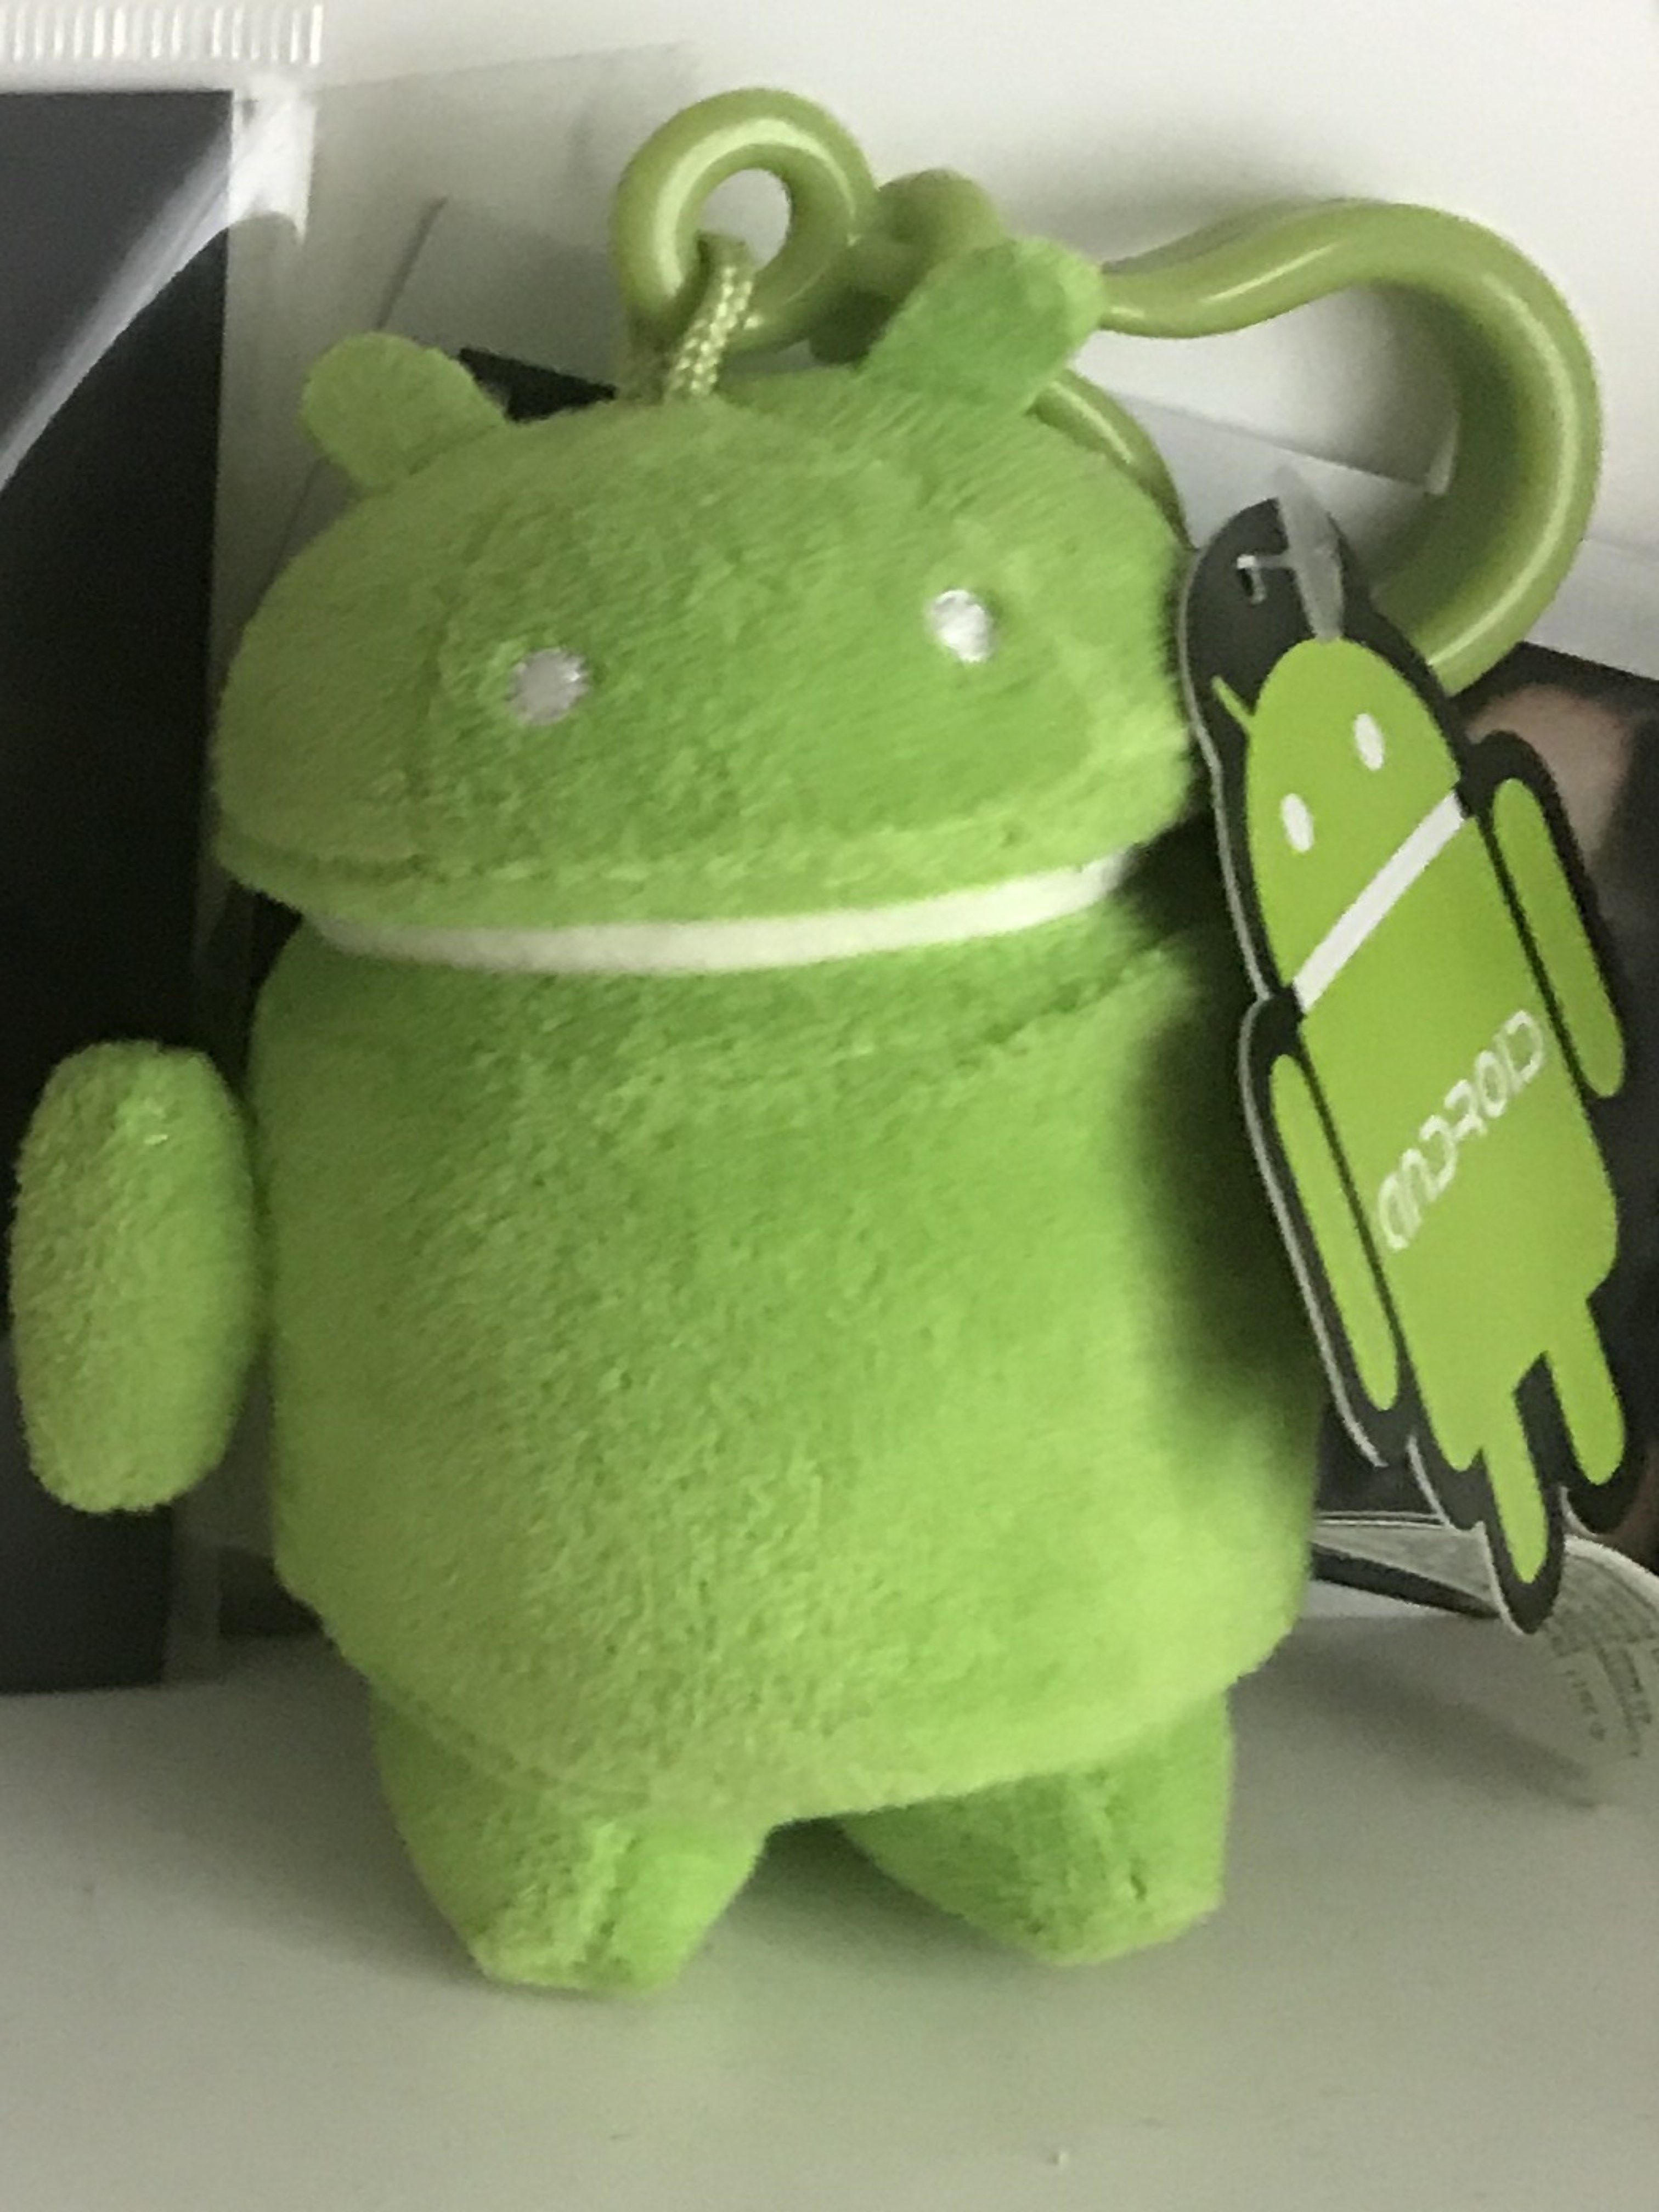 Toy android. Мягкая игрушка Android. Мягкая игрушка андроид зеленый. Android игрушка зеленый для детей. Картинки игрушки андроид.